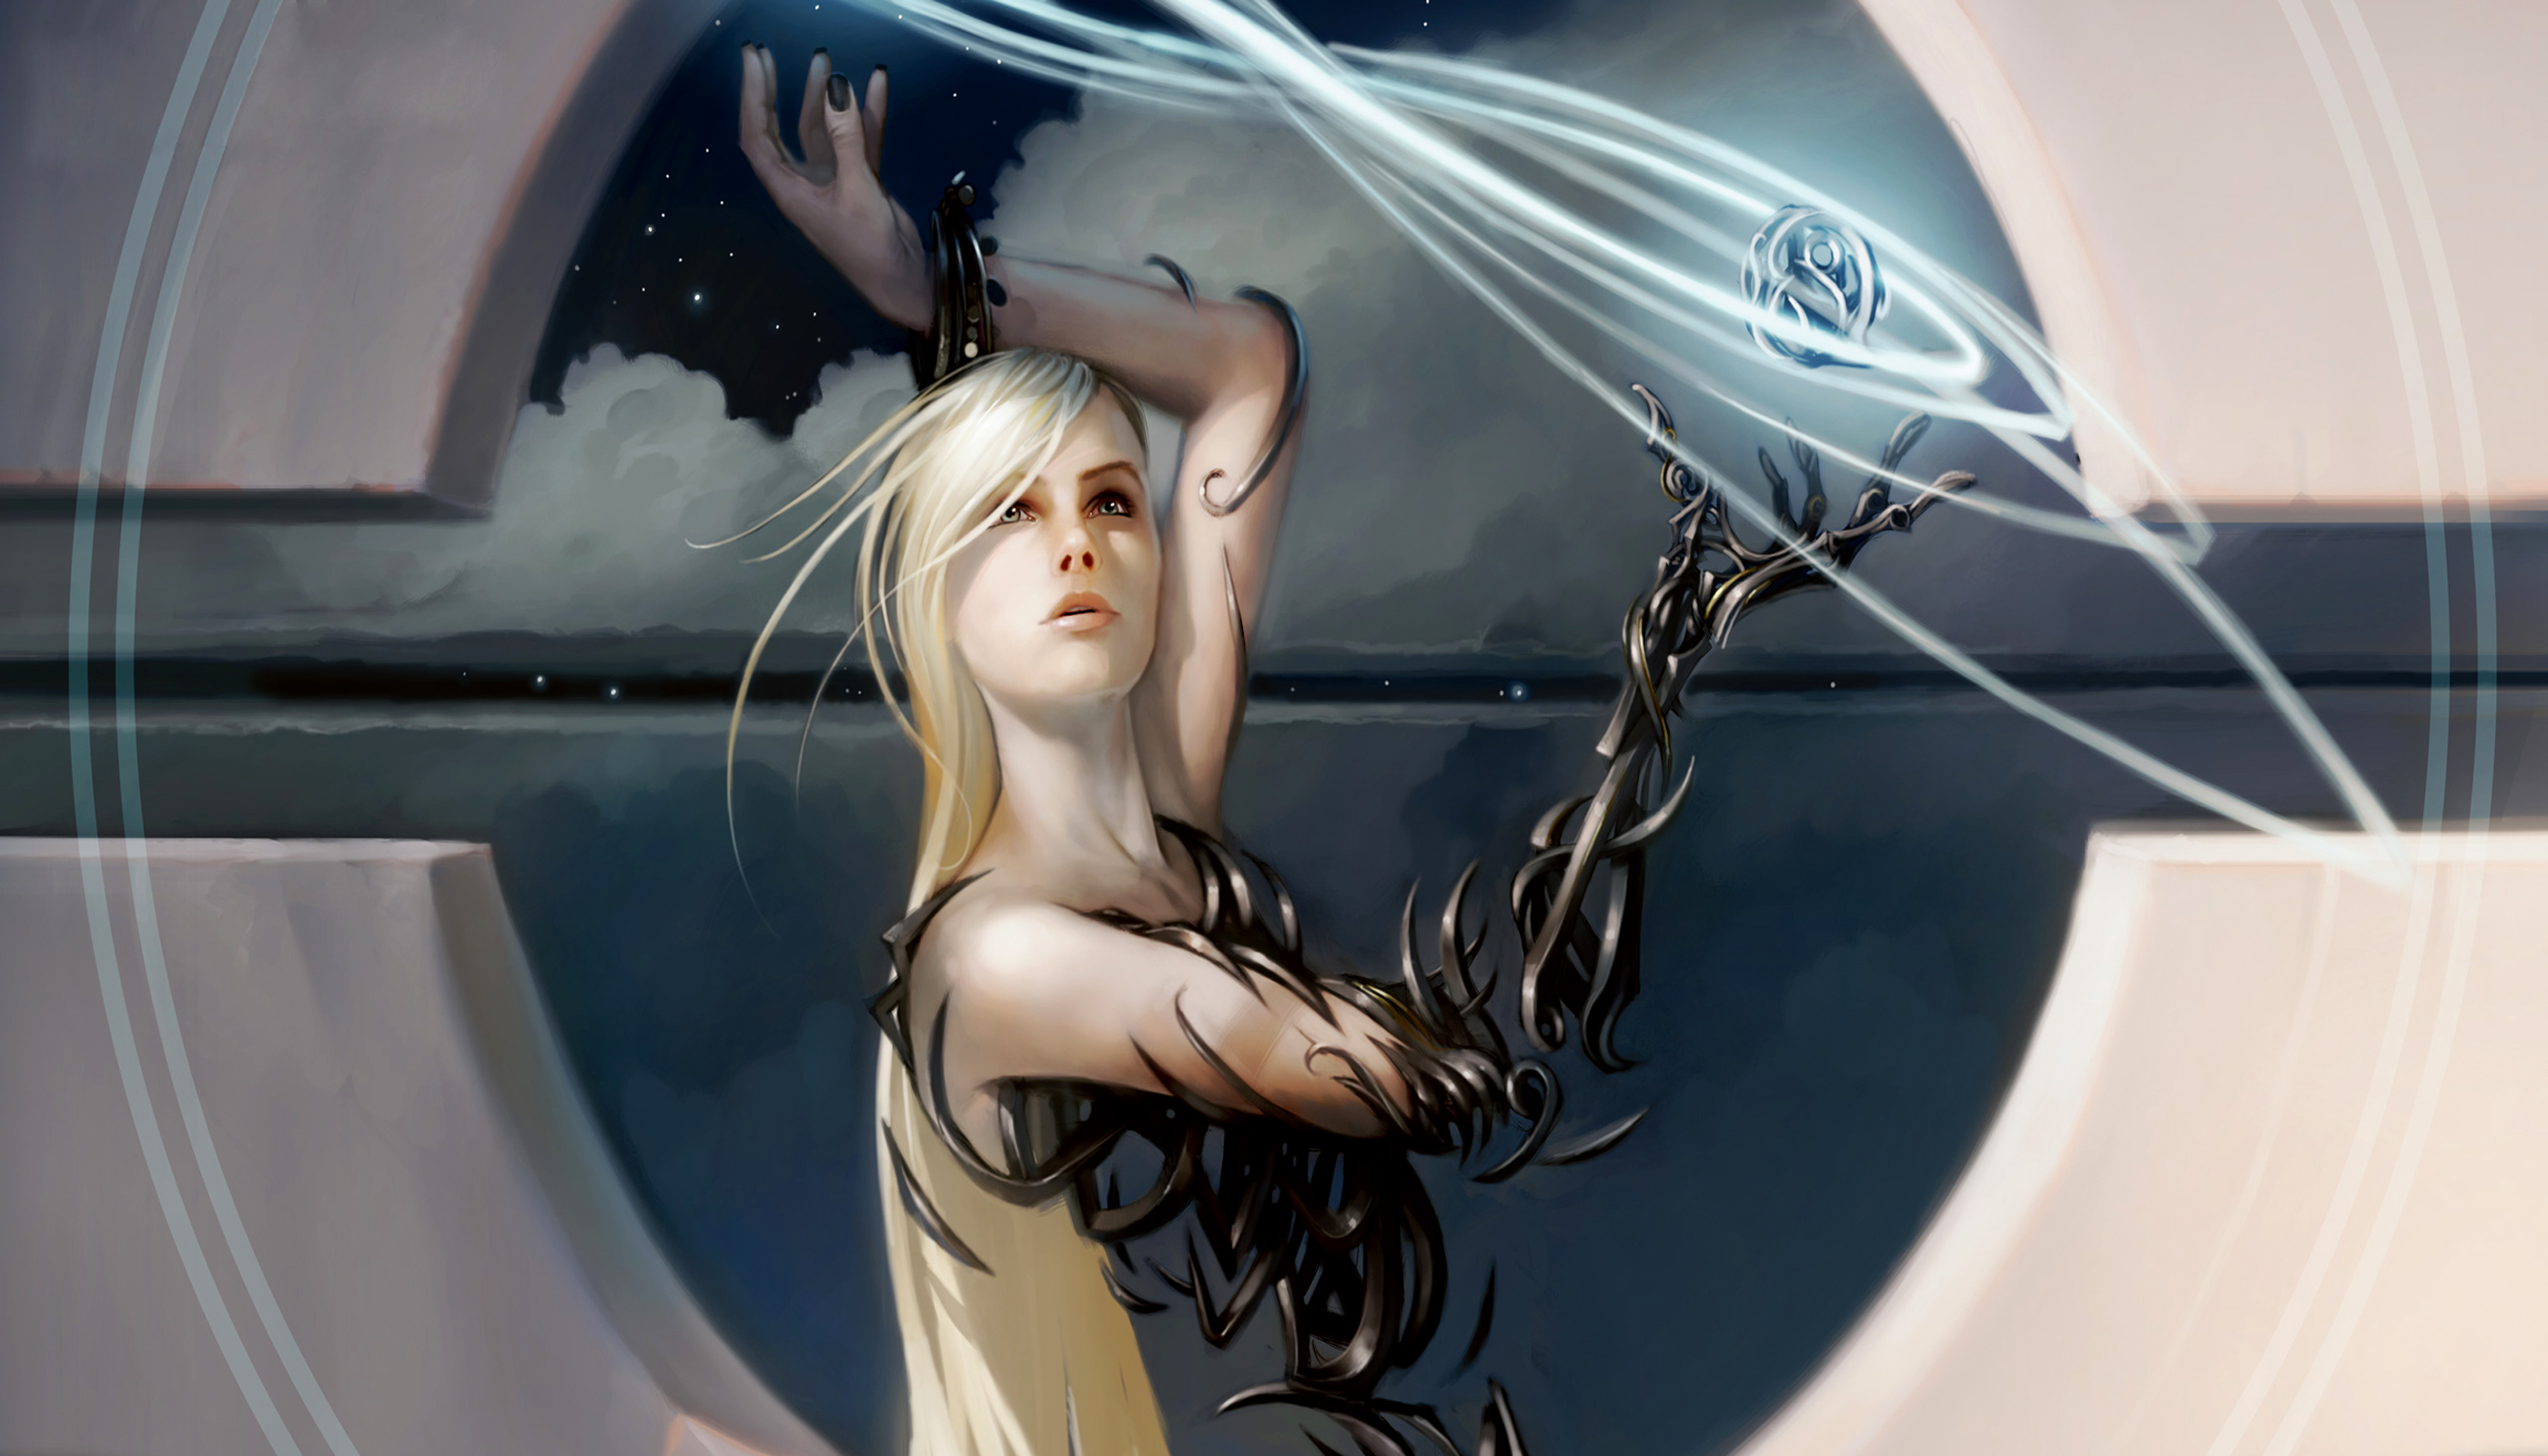 General 2800x1600 artwork women Magic: The Gathering fantasy art digital art fantasy girl blonde long hair